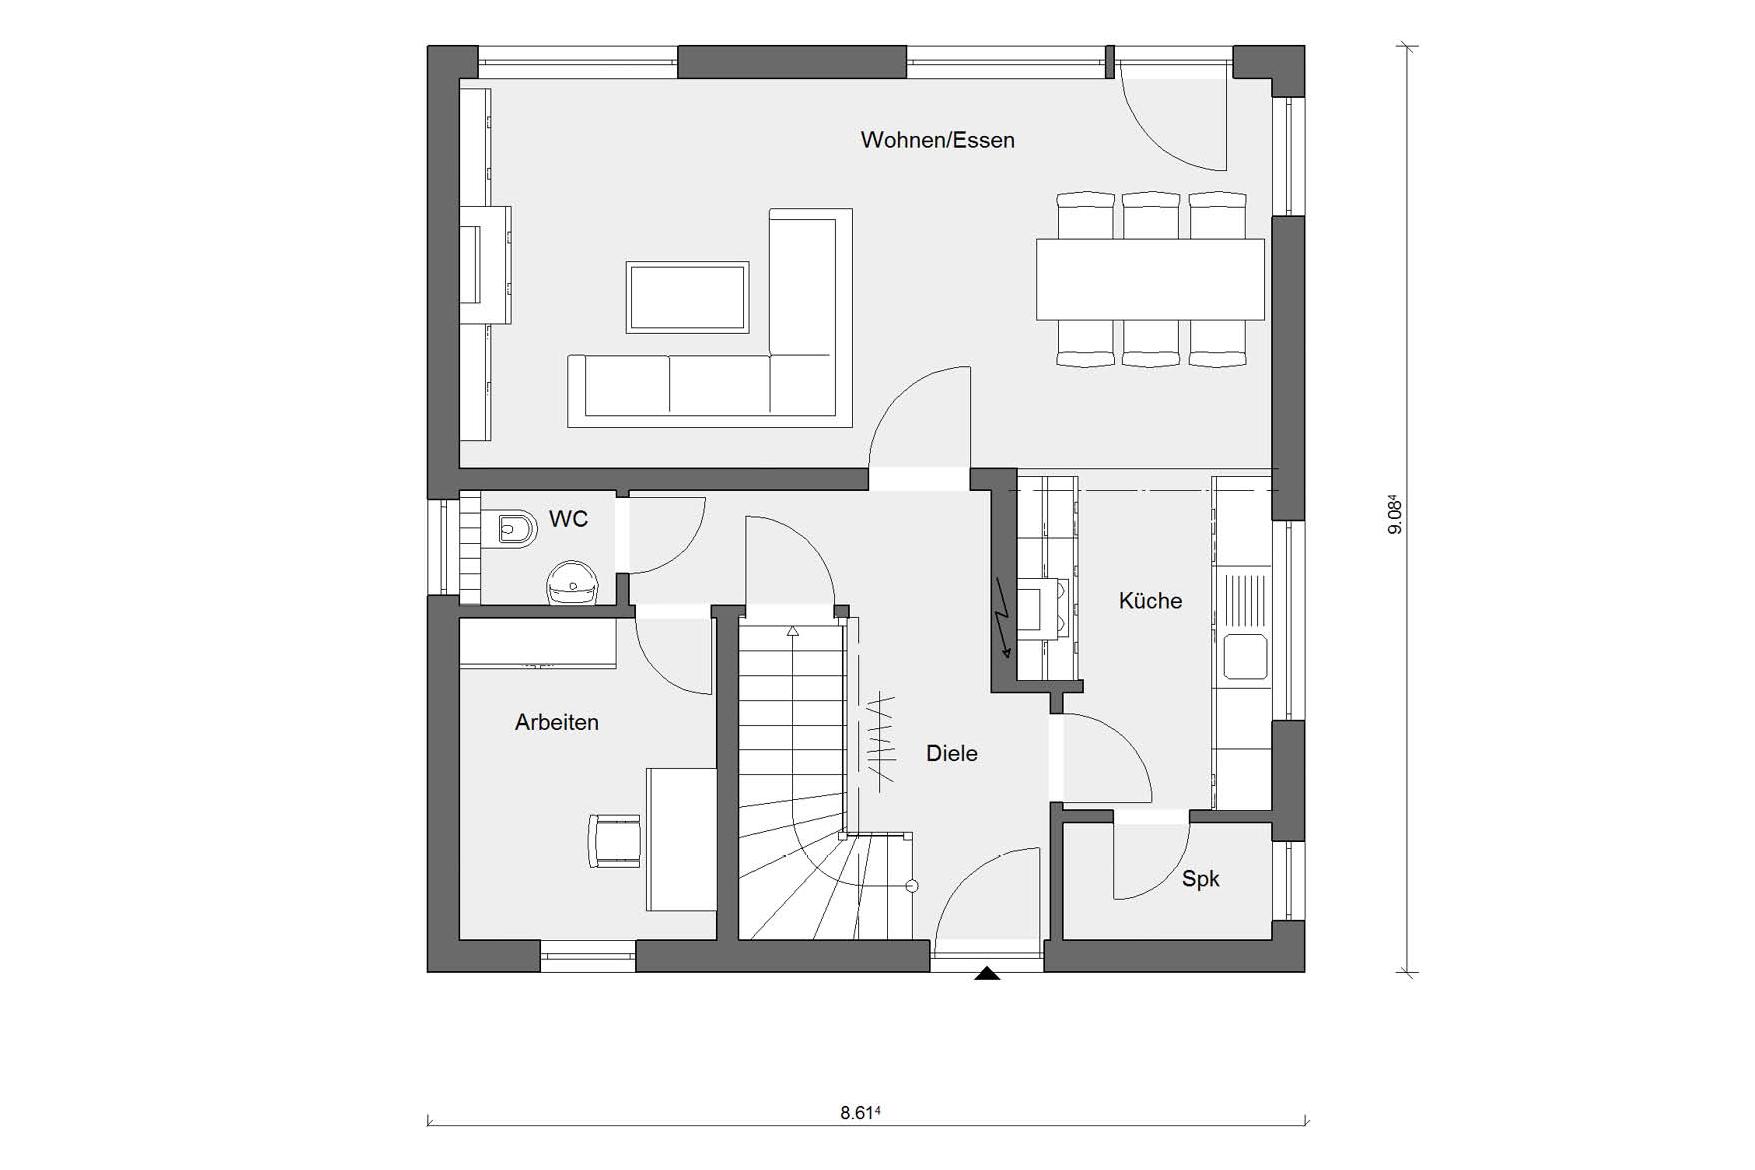 Ground floor layout E 15-127.9 Modern detached house